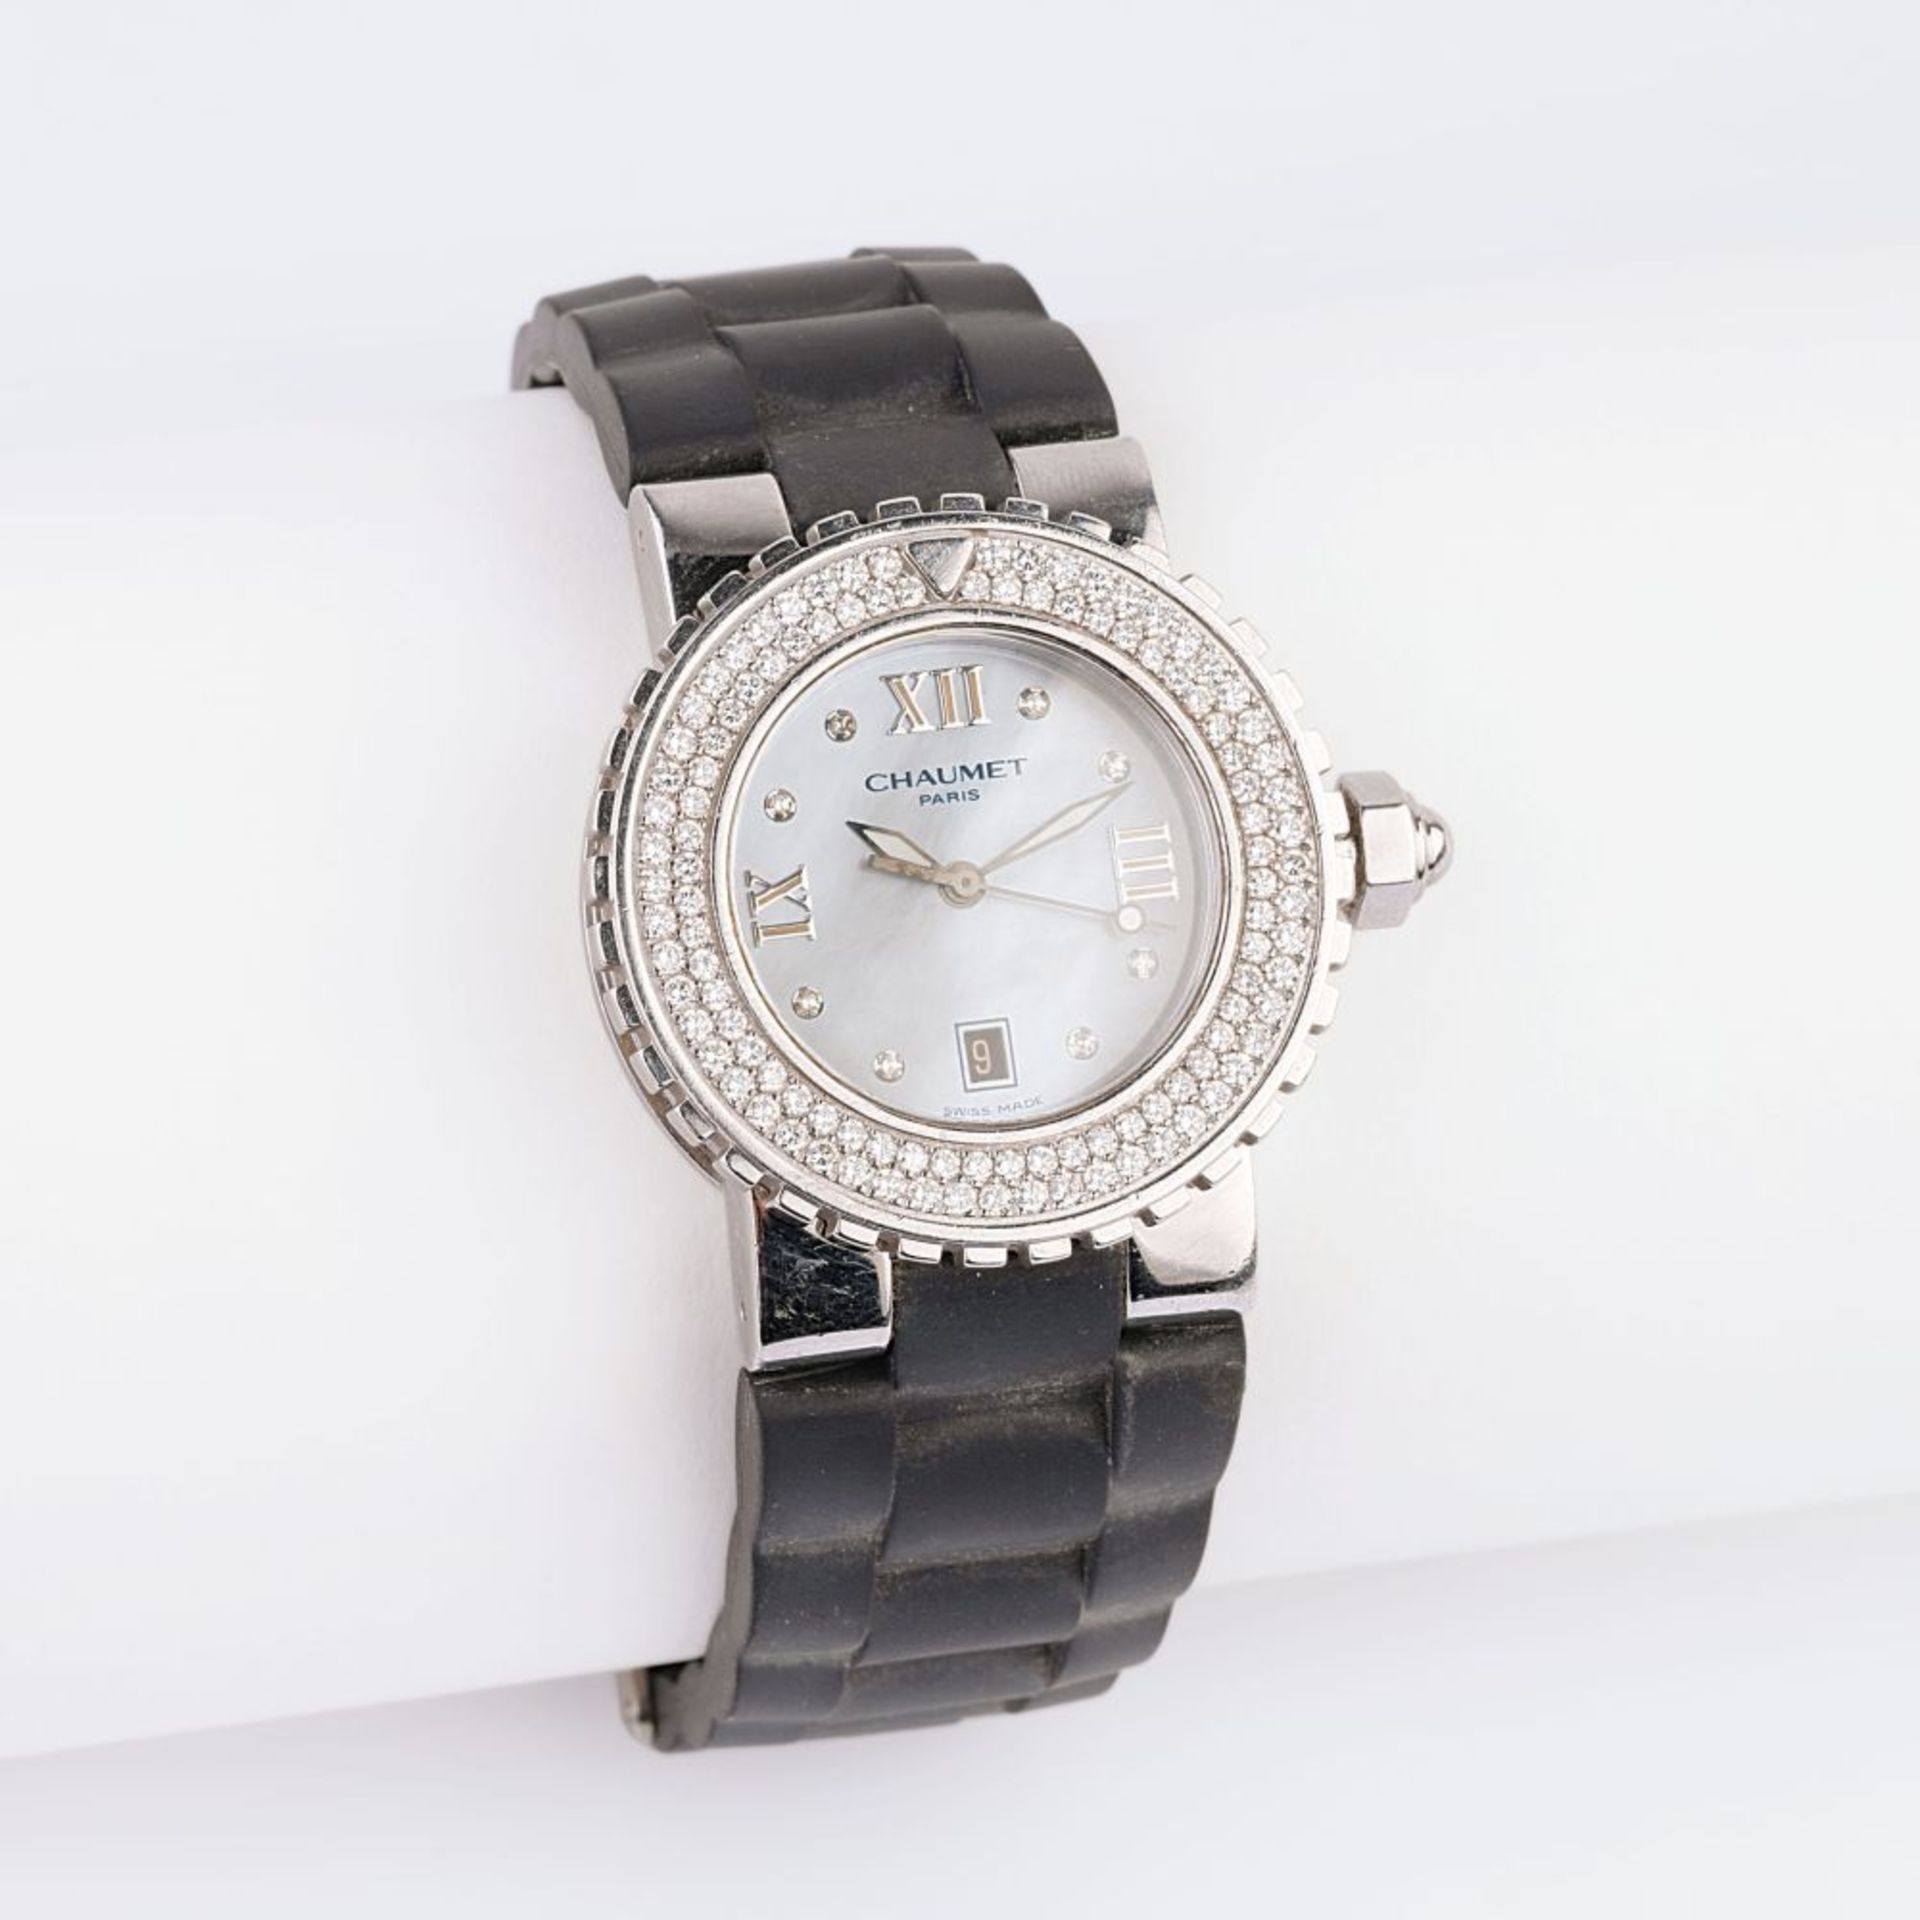 Chaumet Paris, est. 1780. A Ladies' Wristwatch 'Class One' with Diamonds.